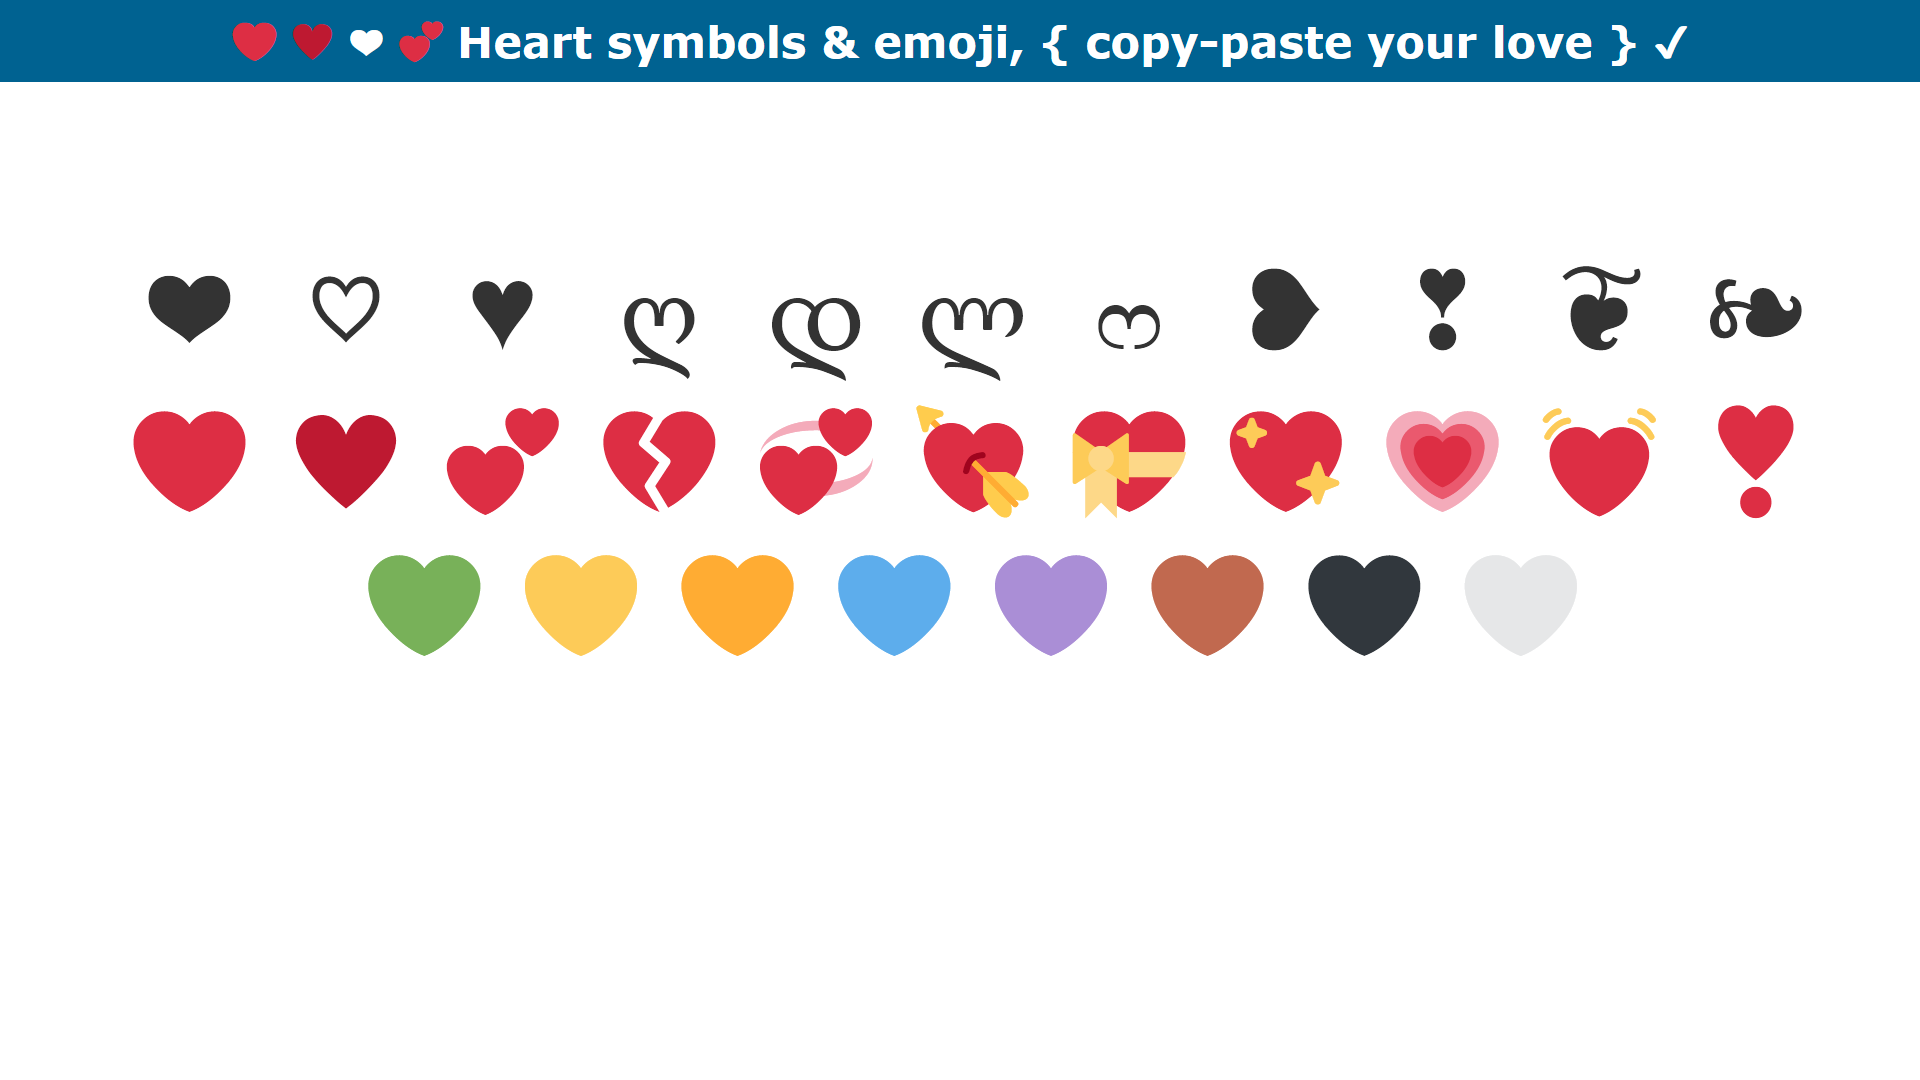 Emojis copy paste